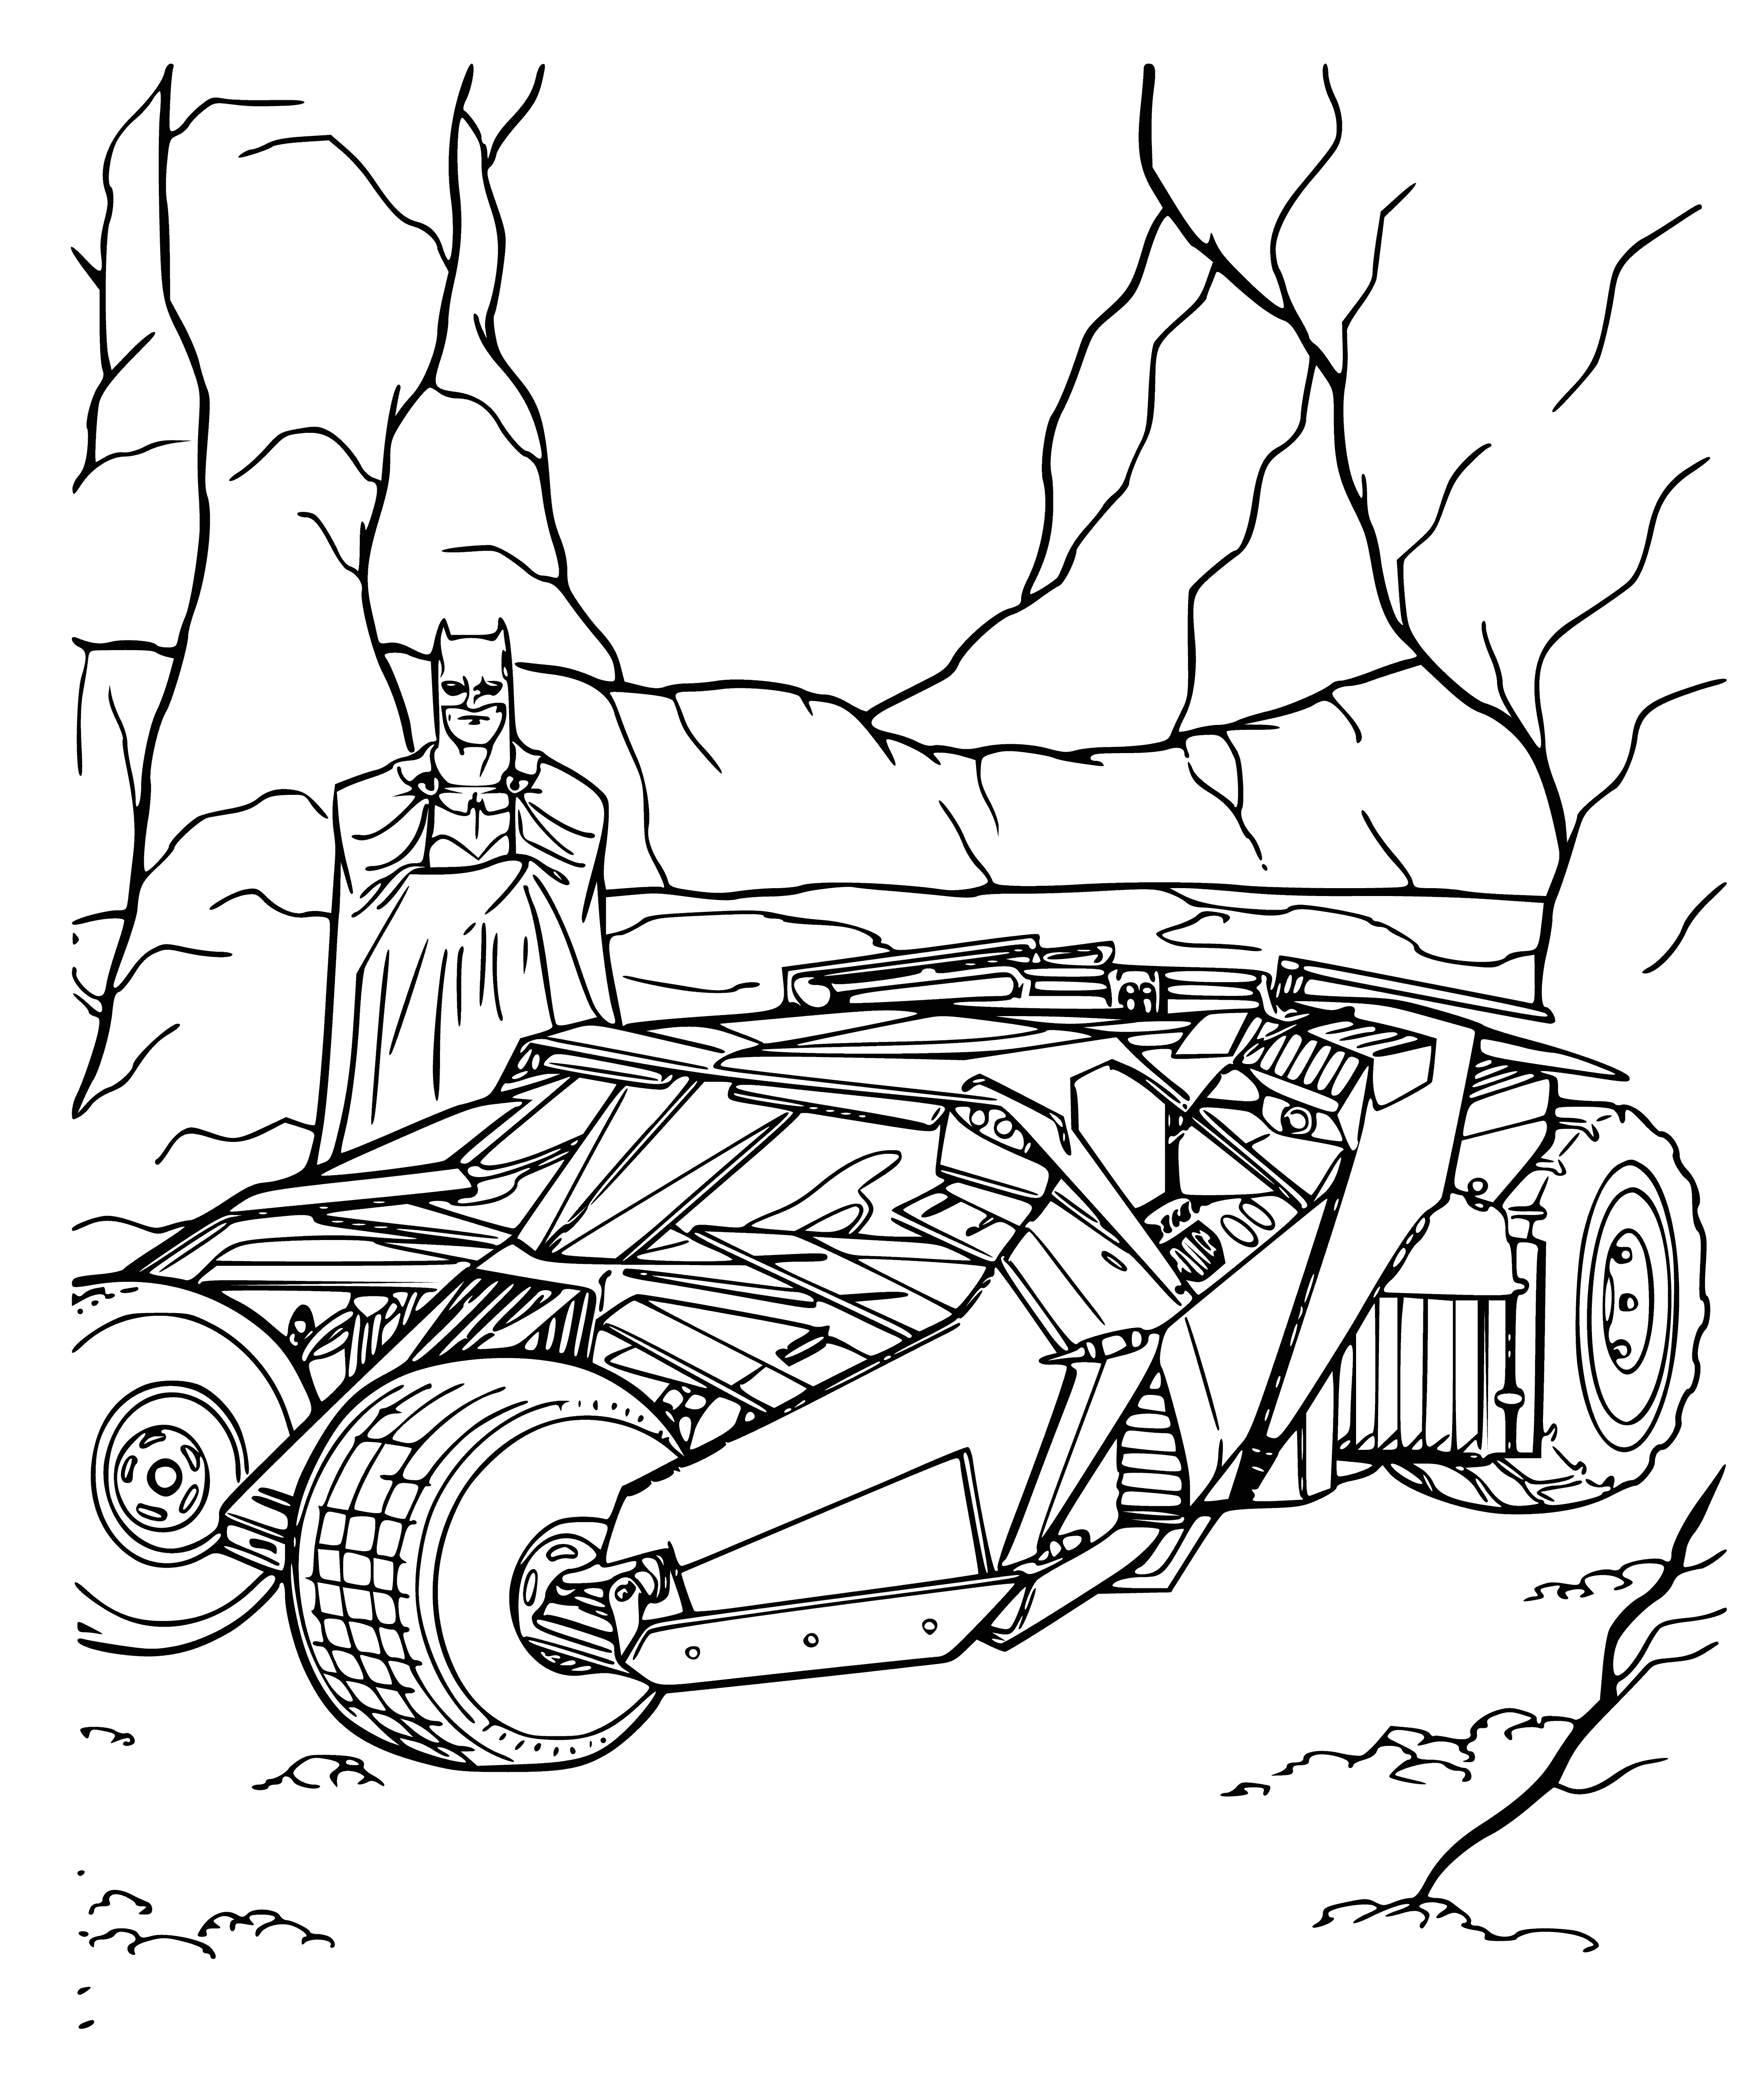 Batmobile coloring page